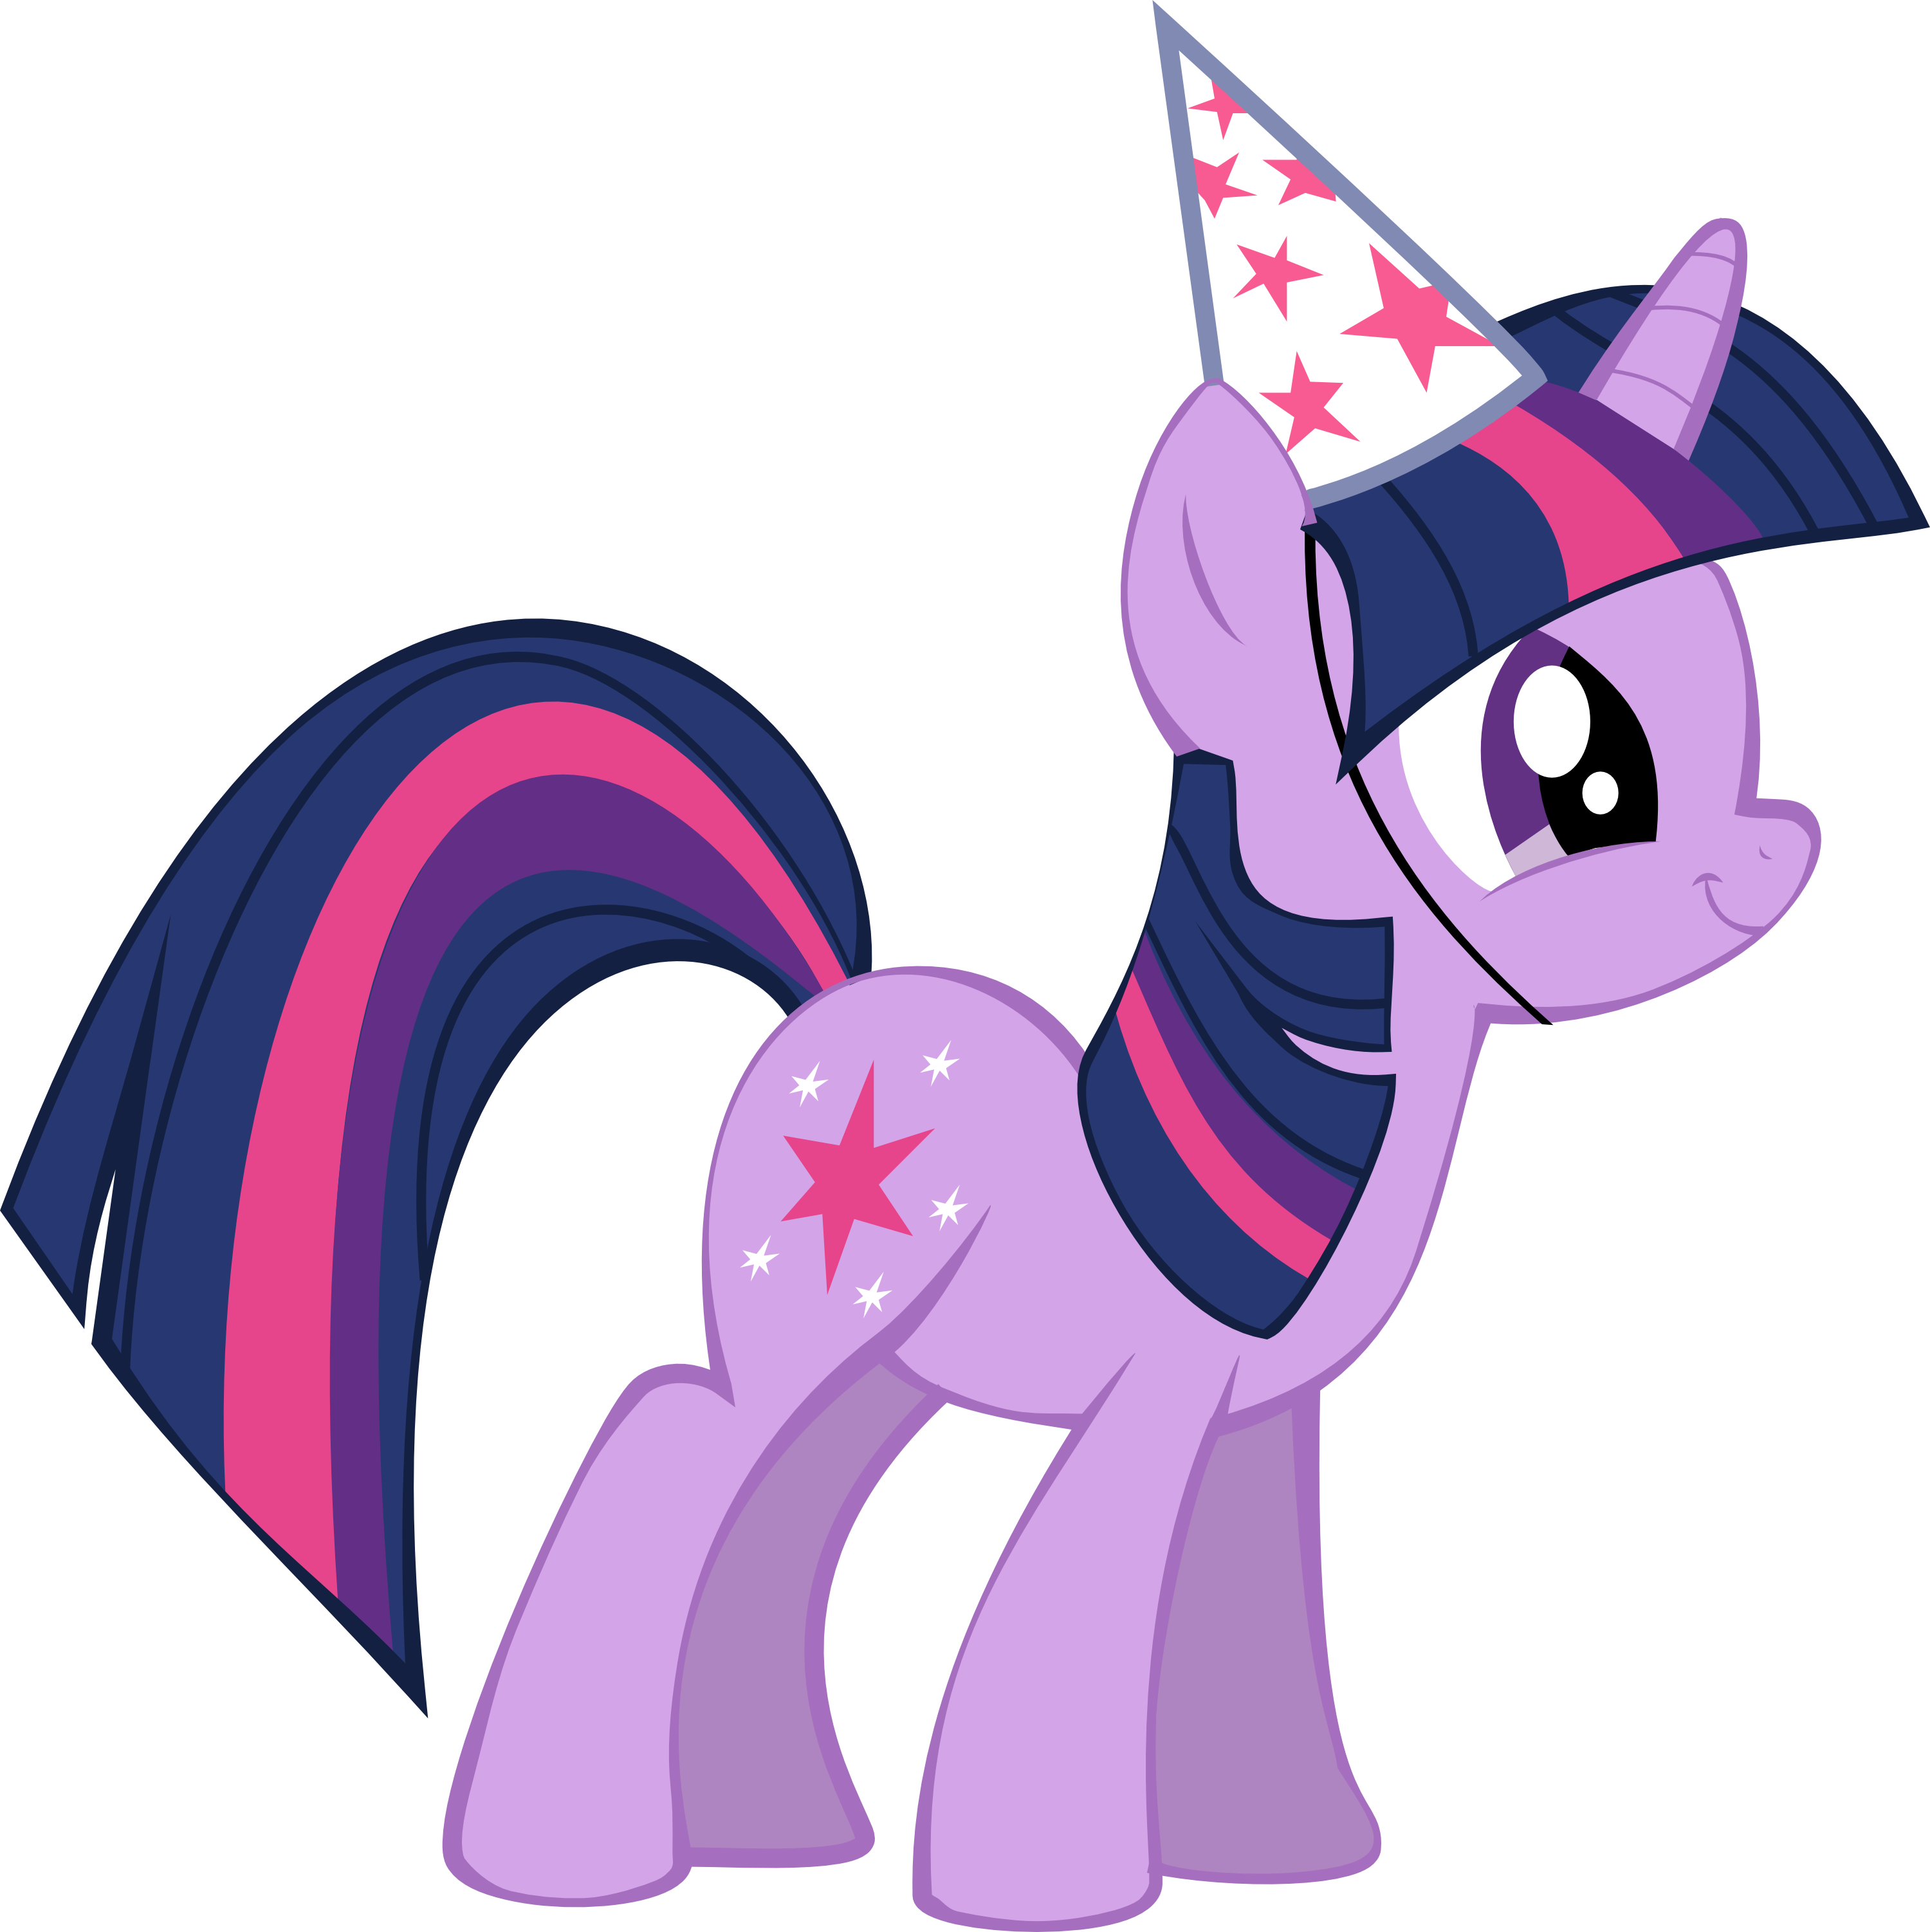 Pony twilight sparkle. Твайлайт Спаркл. My little Pony Твайлайт Спаркл. Сумеречная Искорка Twilight Sparkle. Искорка пони.